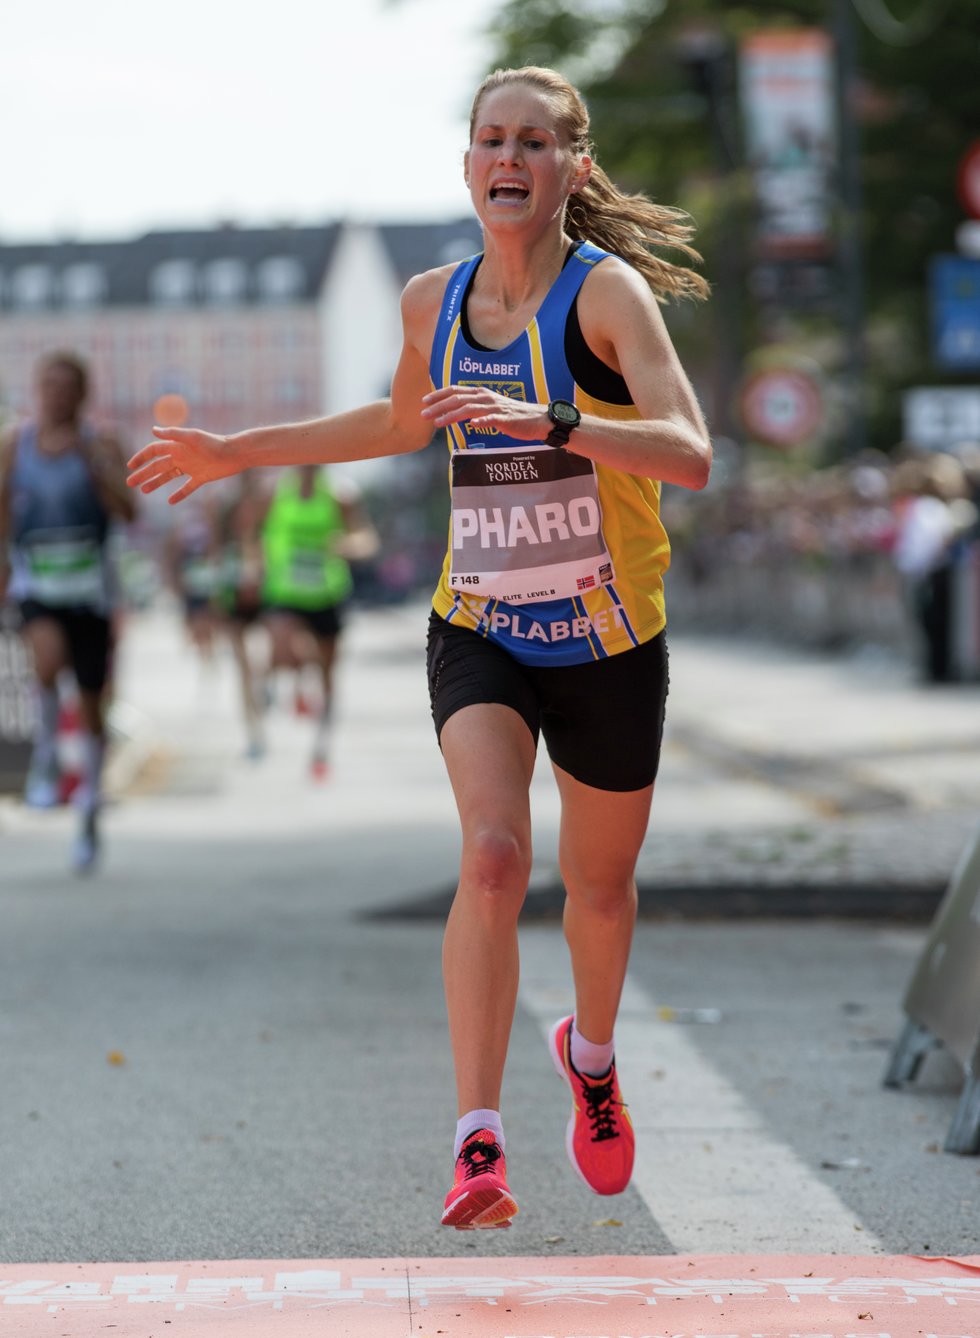 Copenhagen Half Marathon